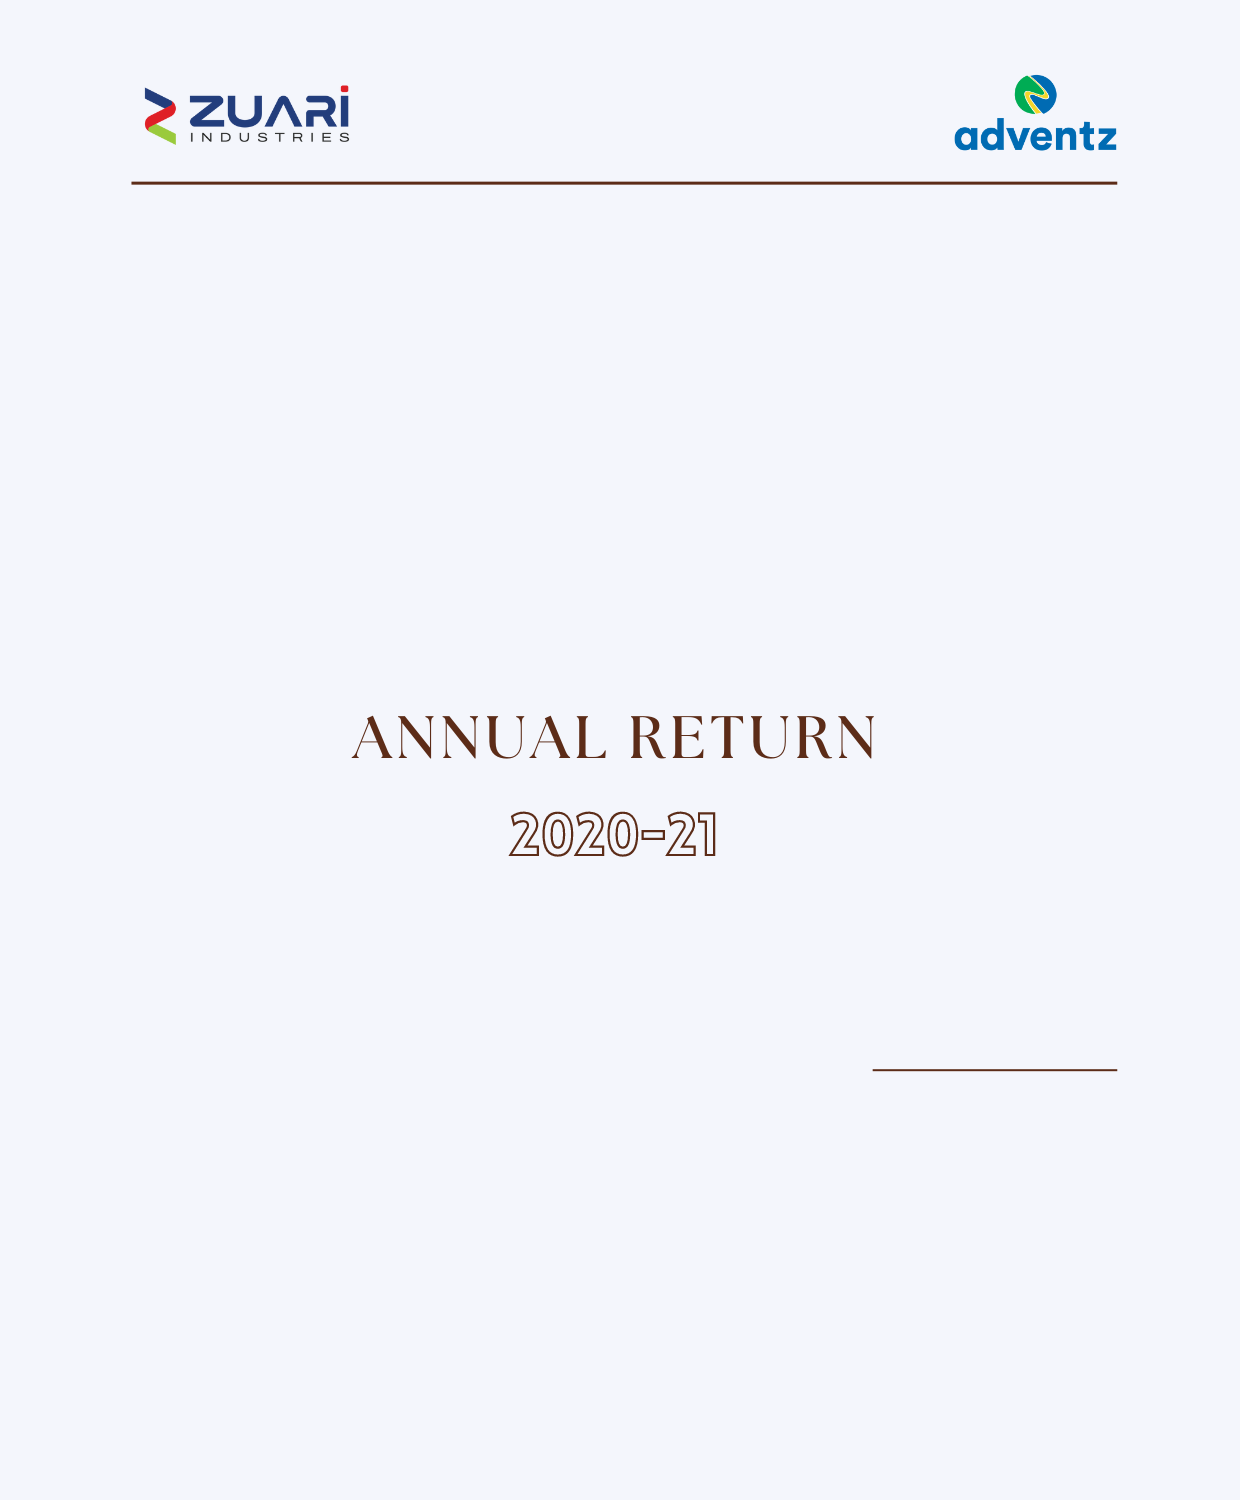 Annual return 2020-21